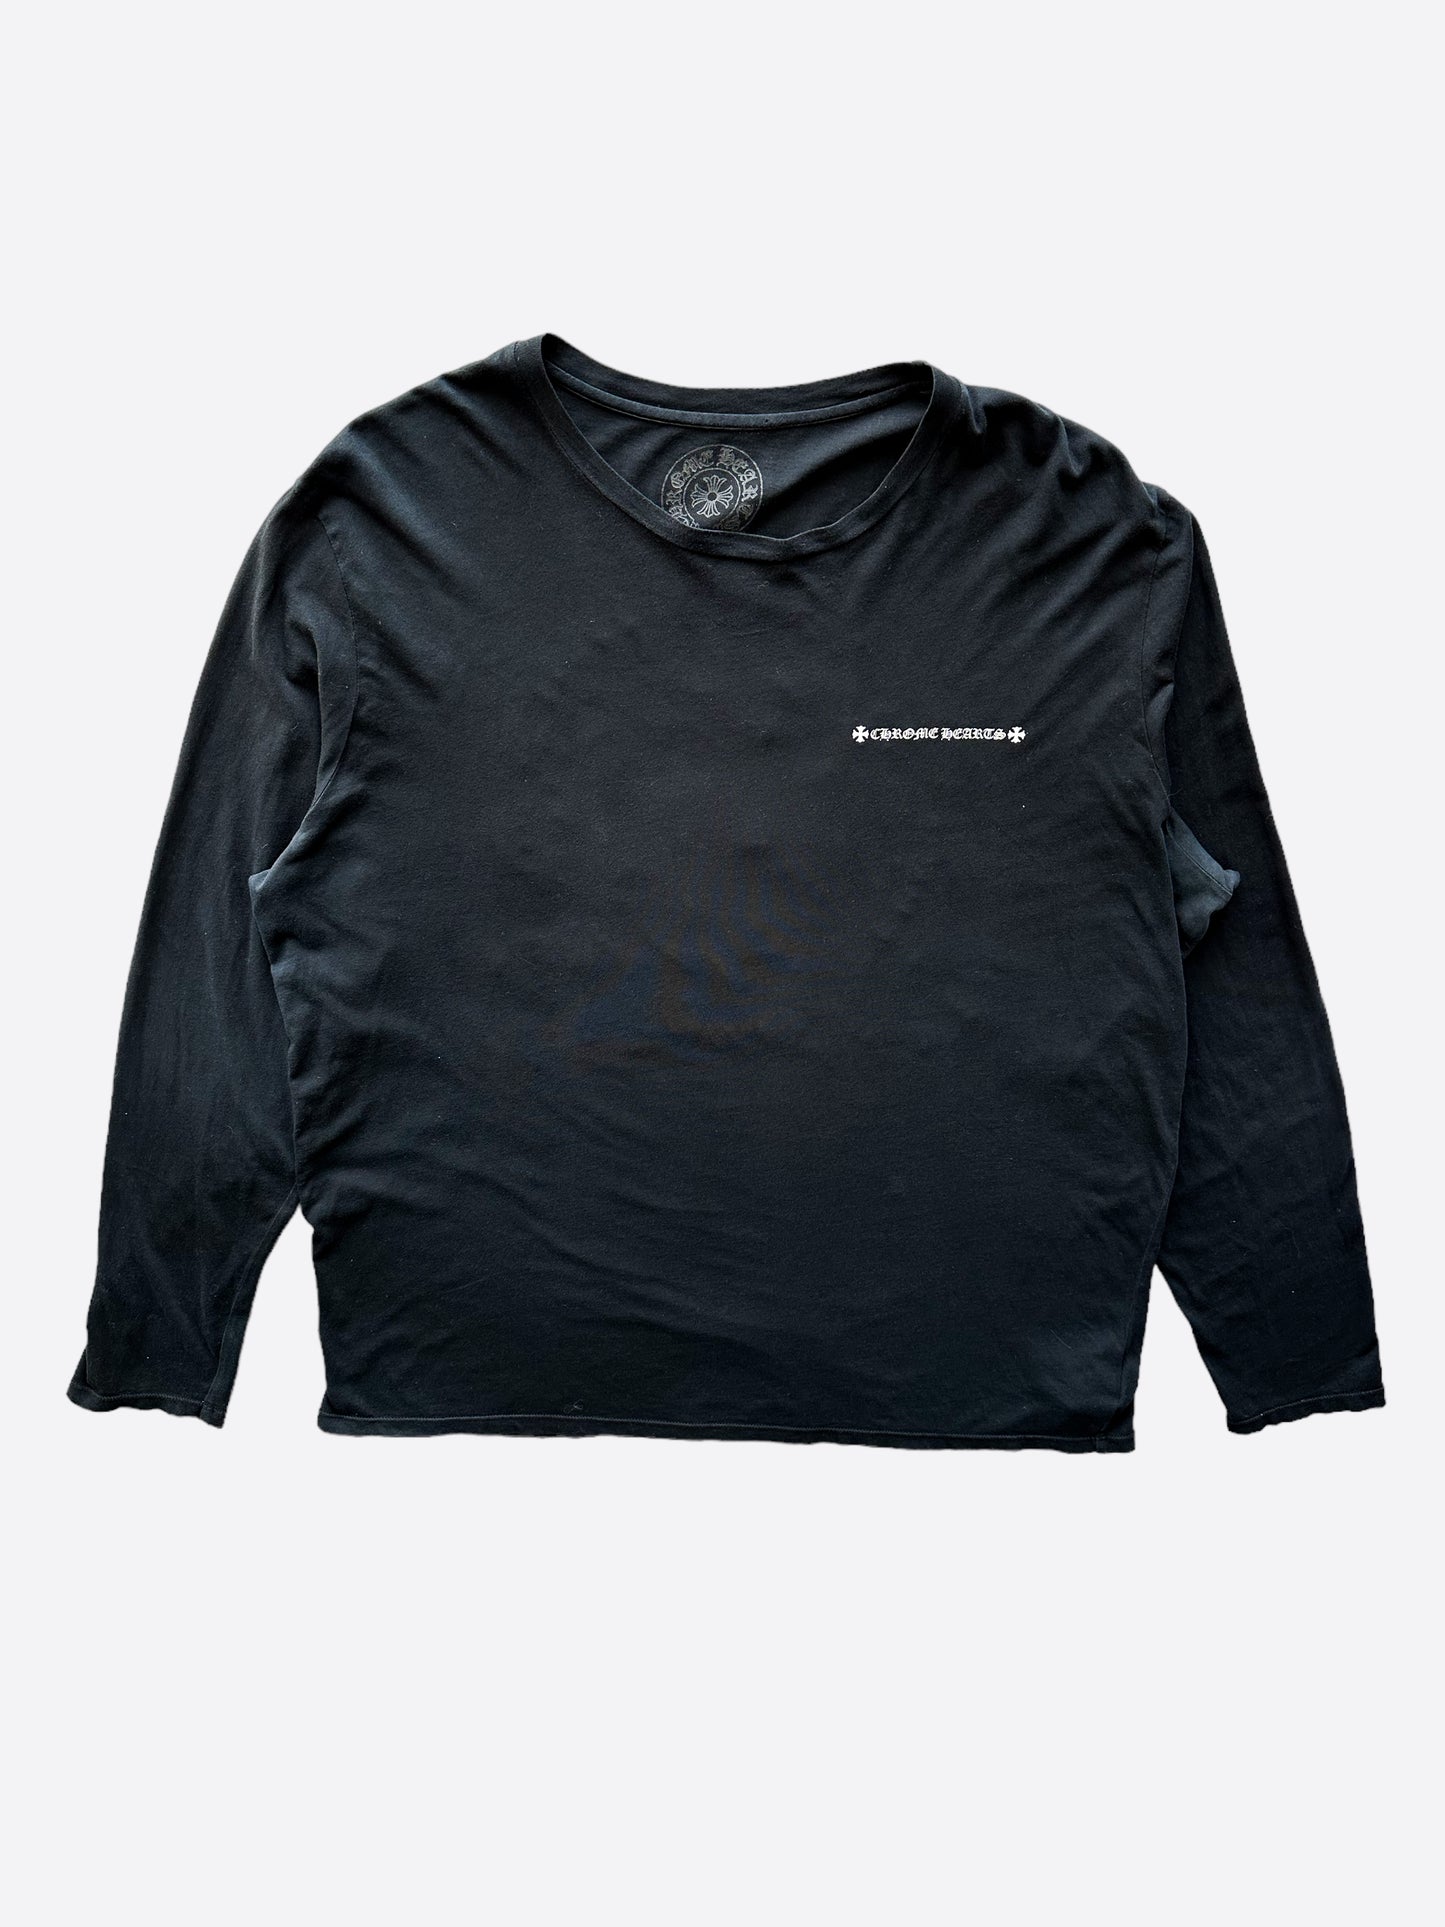 Chrome Hearts Neck Logo Cross Sleeve L/S Sweatshirt